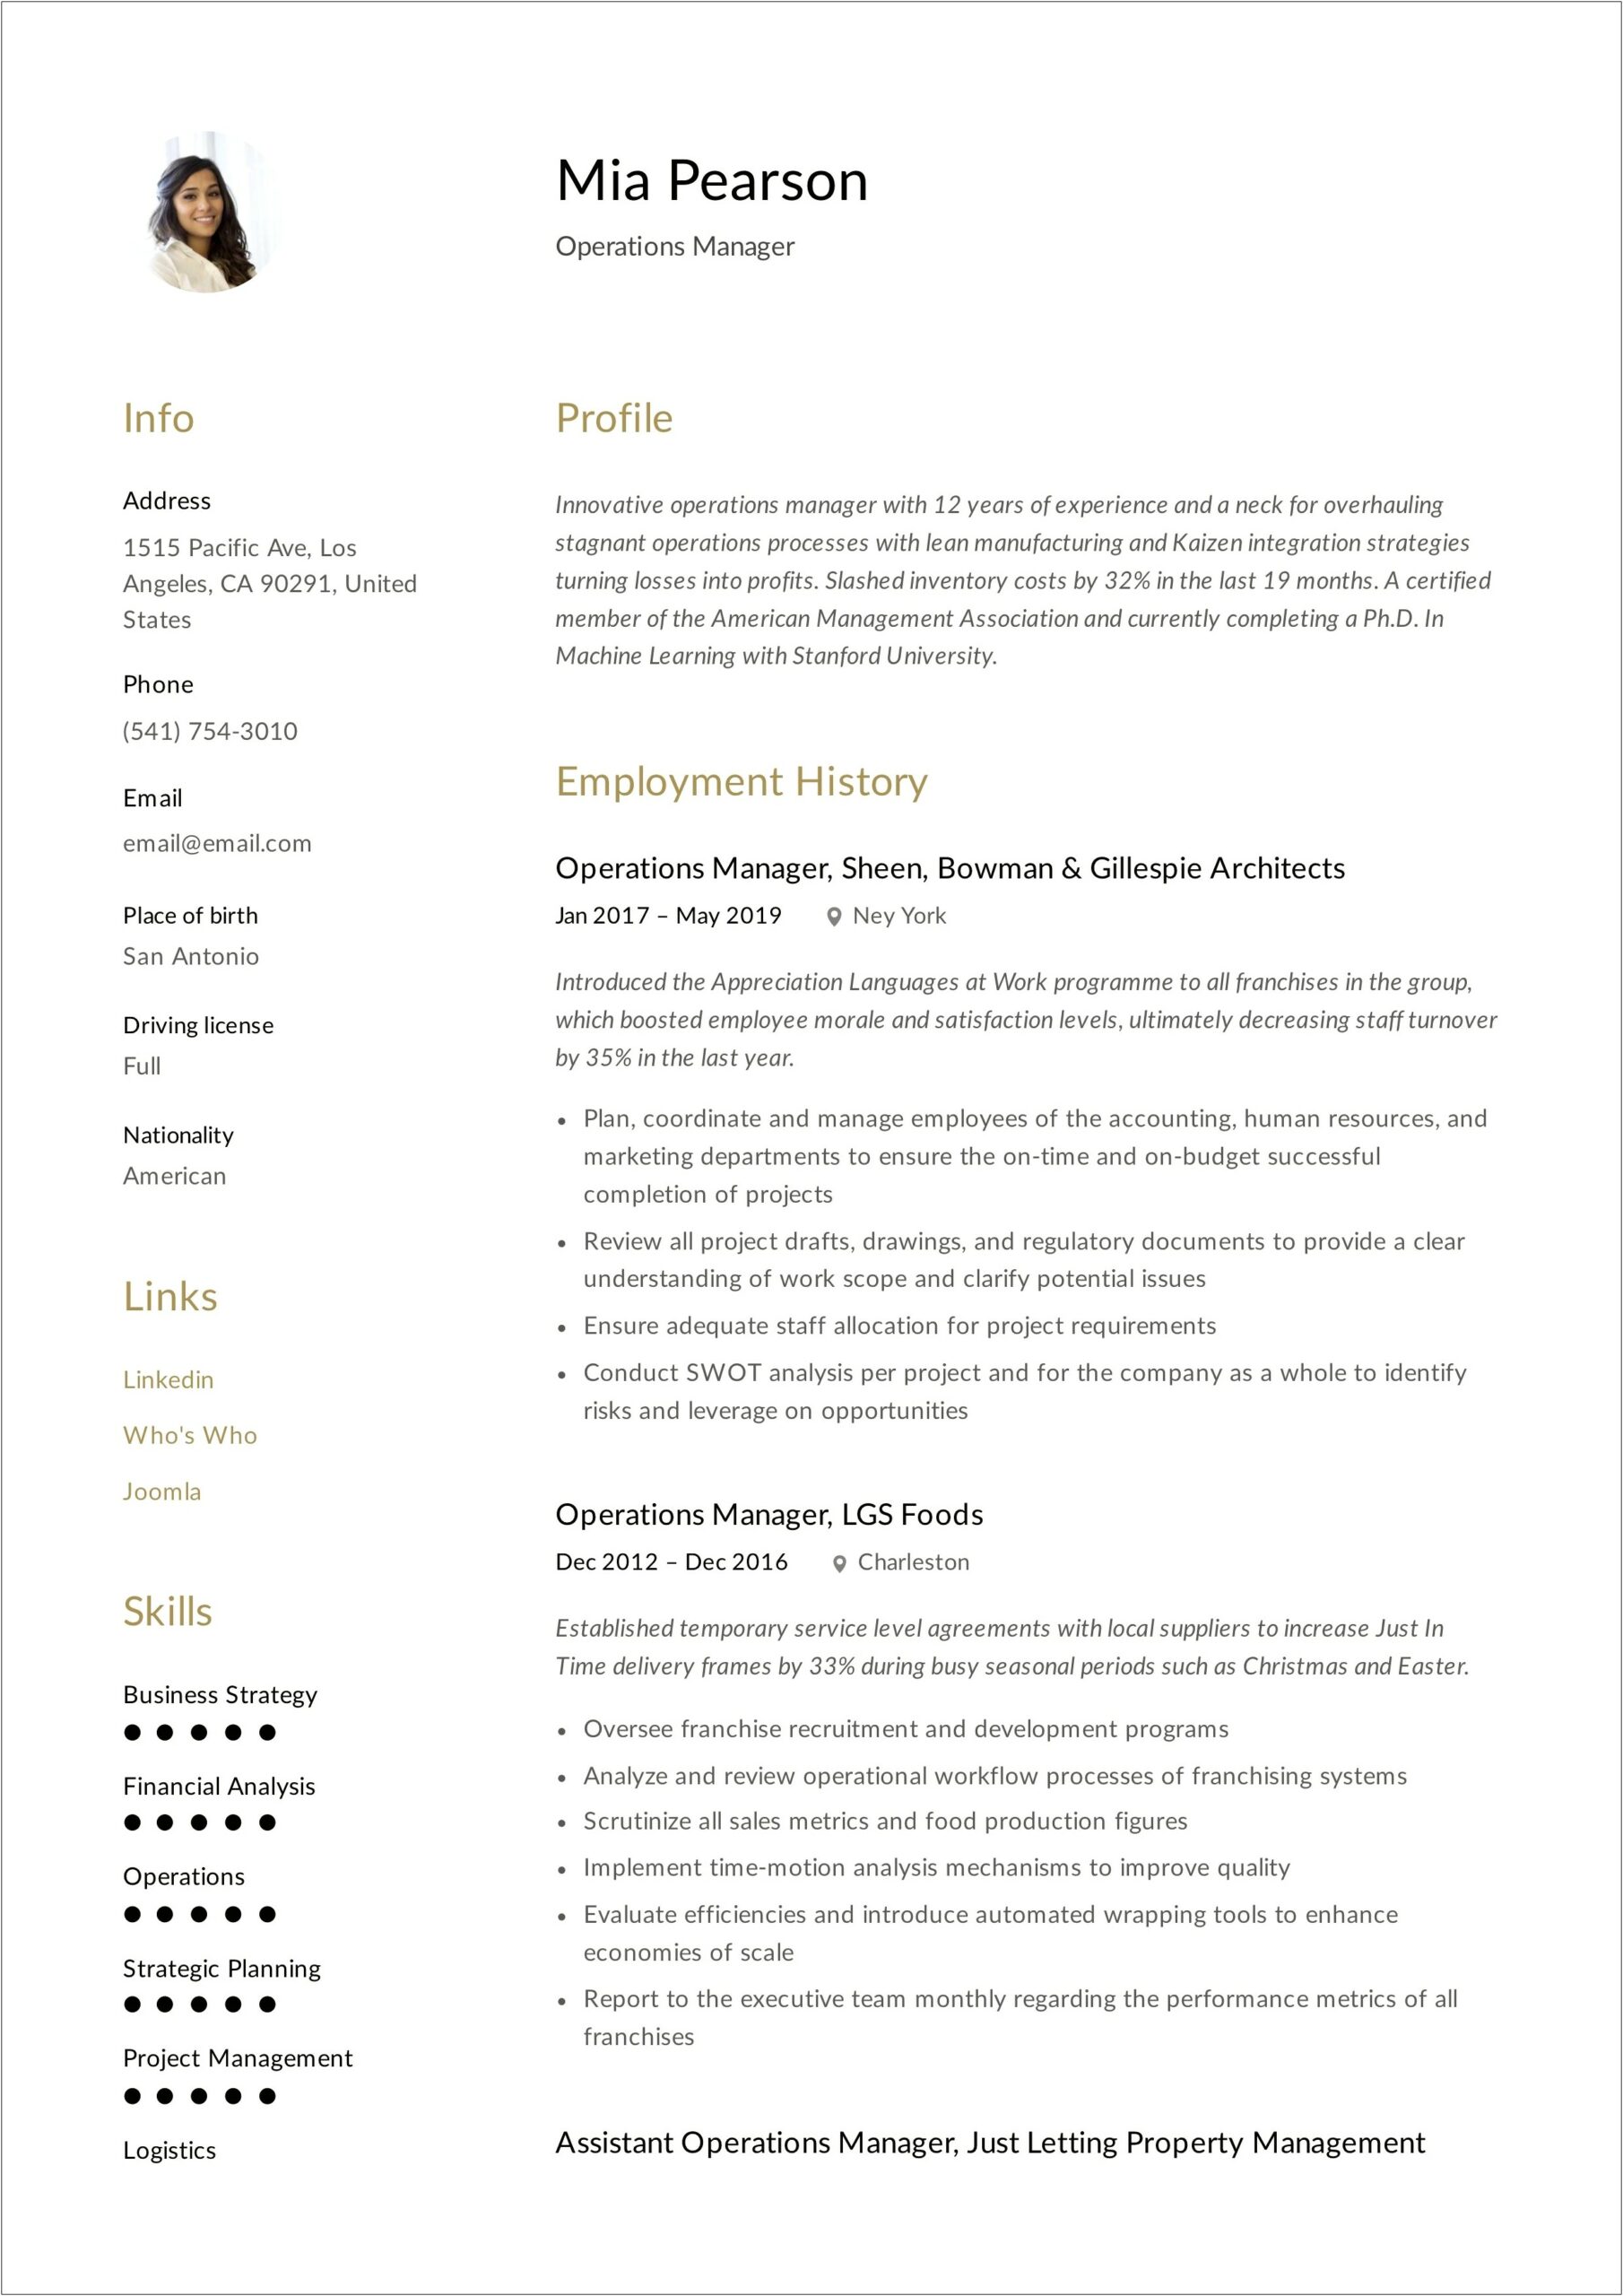 Operations Management Job Description For Resume